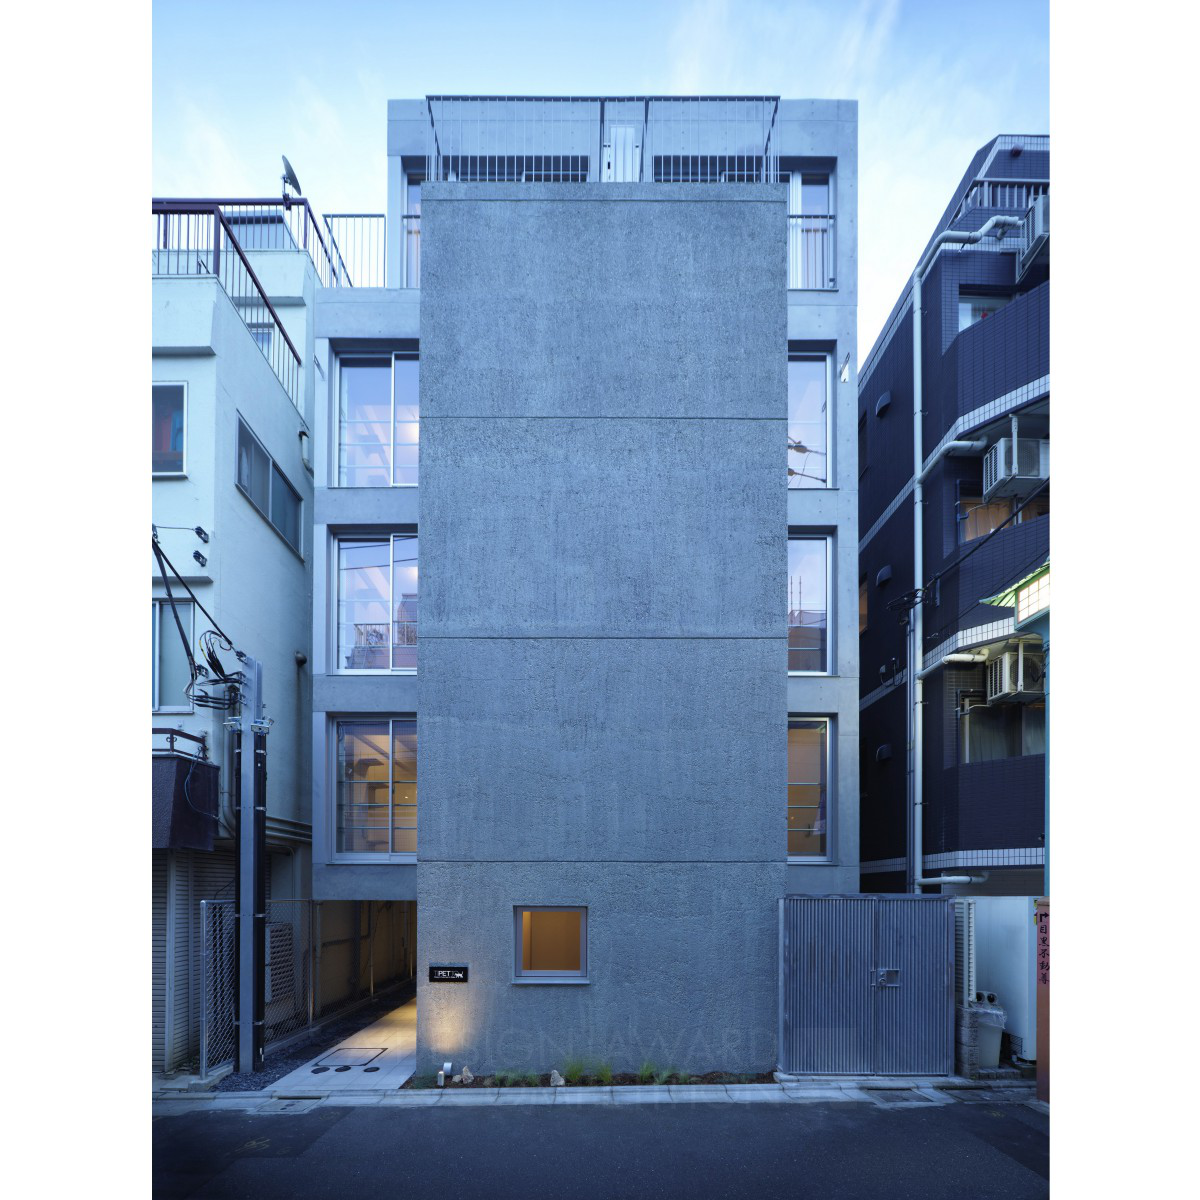 Fudomae Apartment with Six Voids Complex by Akira Koyama